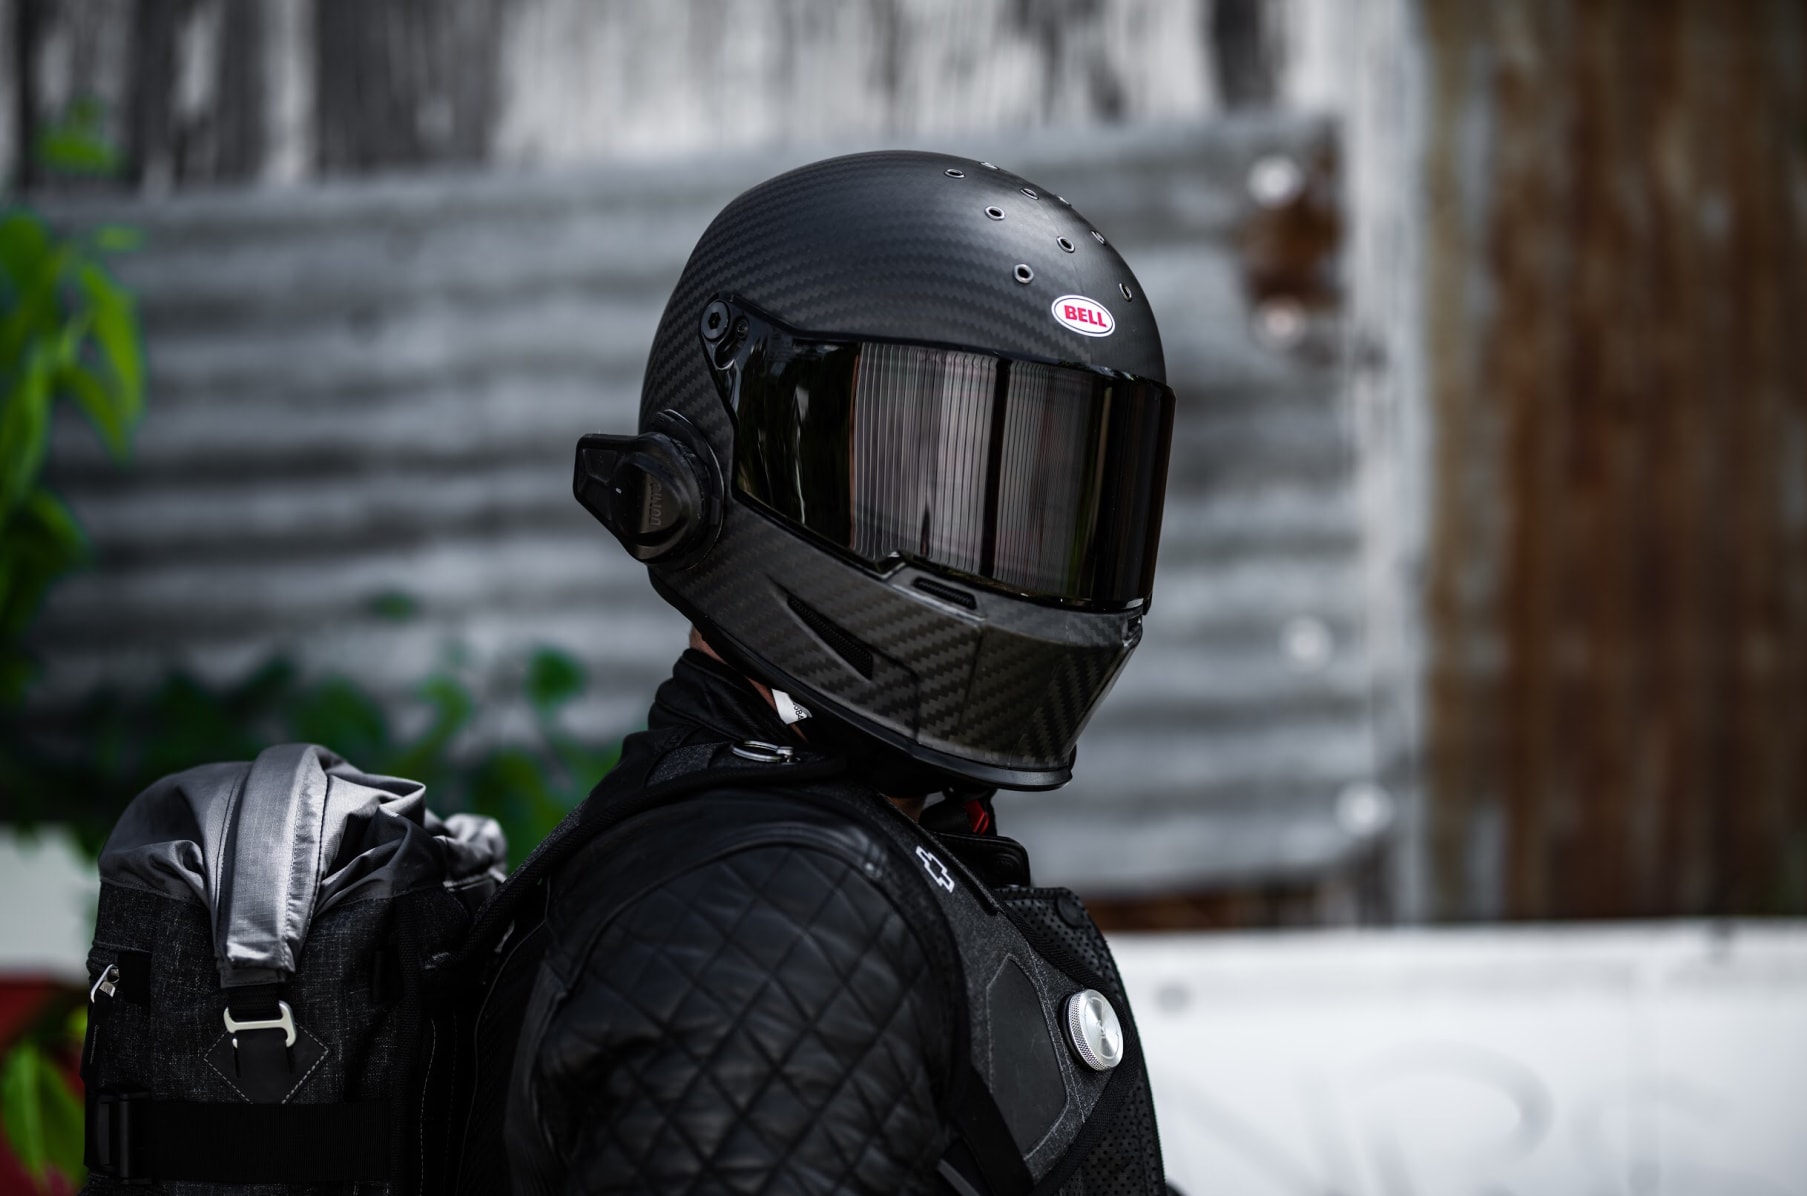 Domio Pro A Game Changer In Helmet Audio Comms Indiegogo